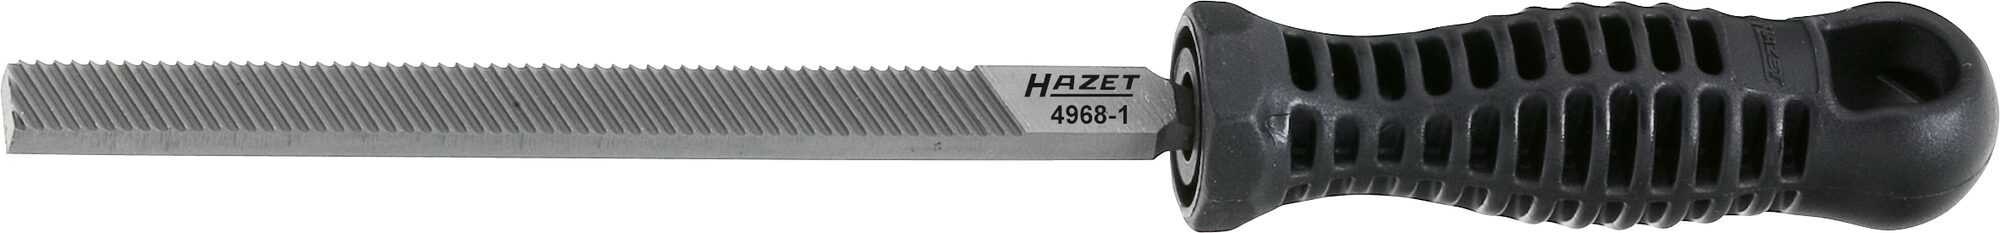 HAZET Bremssattel-Feile 4968-1 · 260 mm